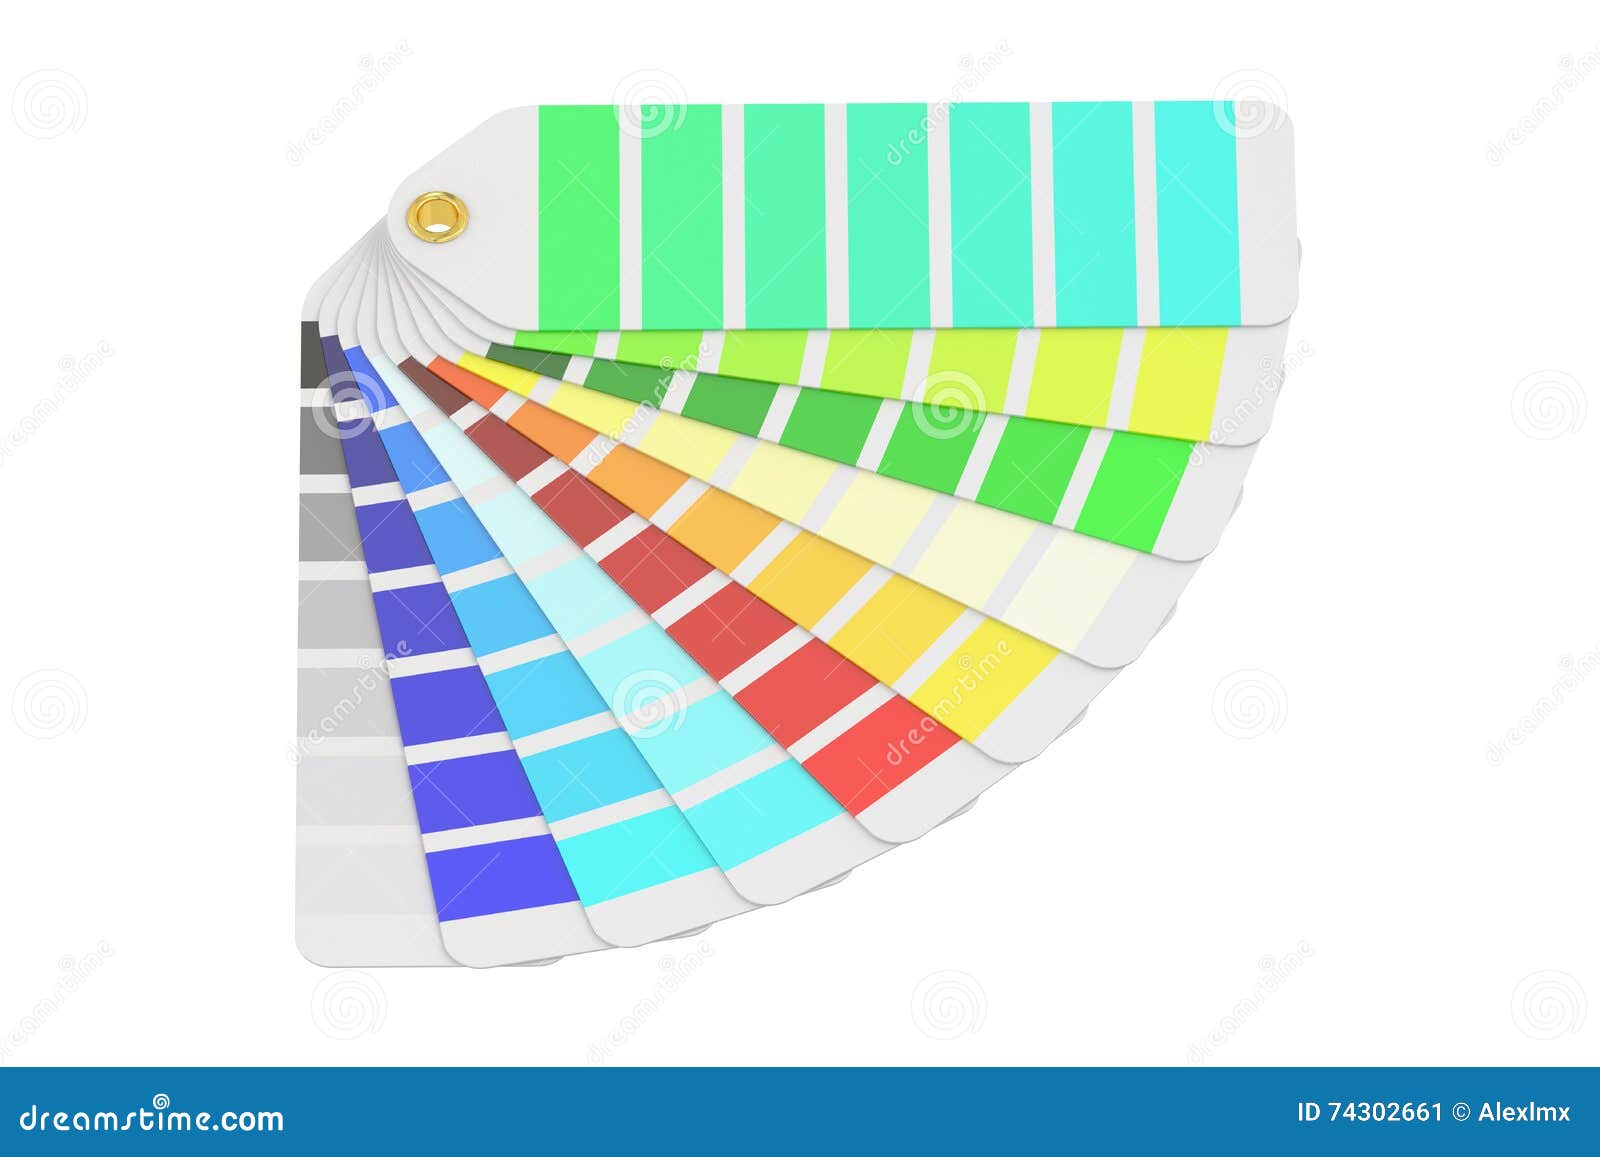 pantone color palette guide, 3d rendering